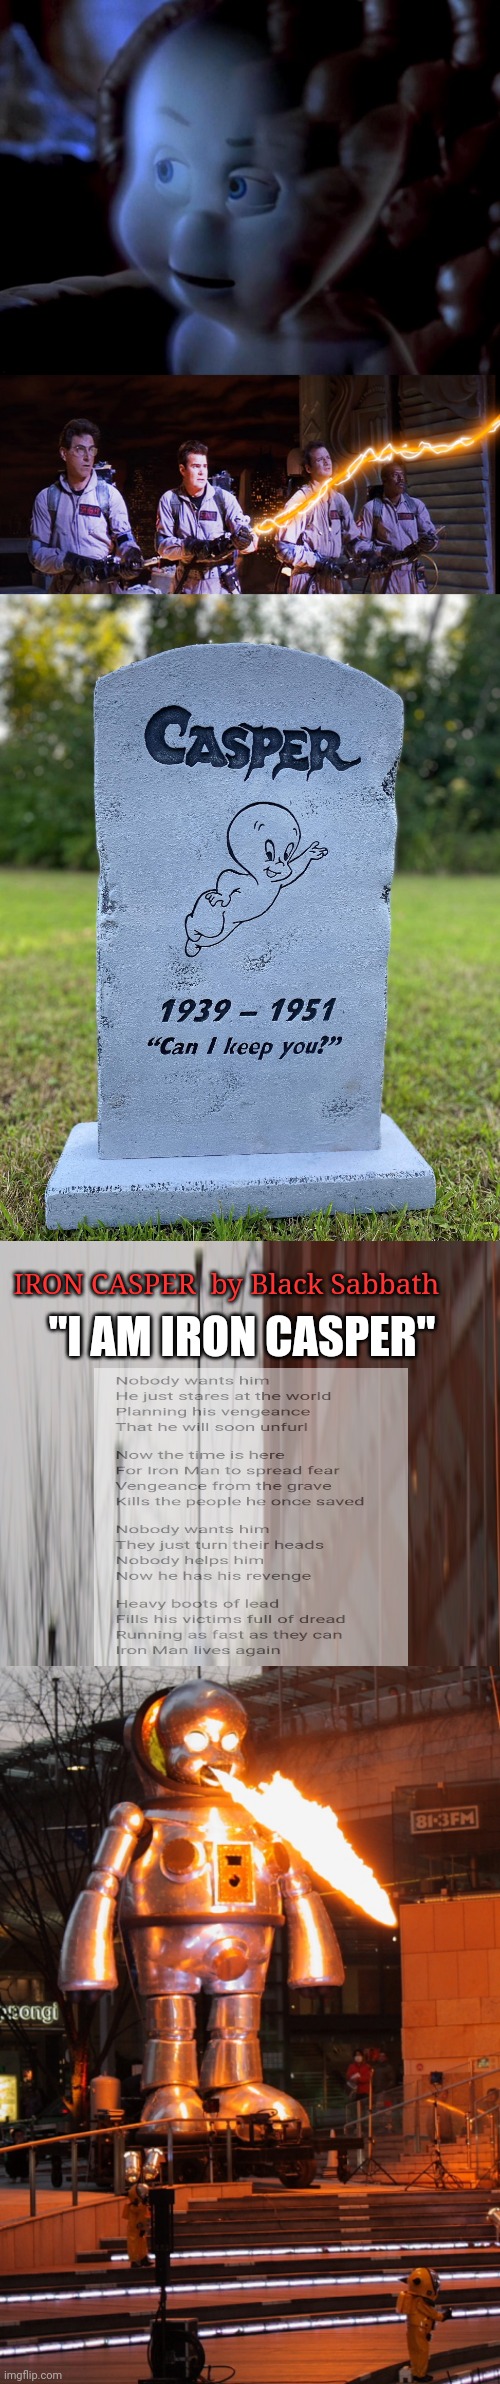 Iron Casper | IRON CASPER  by Black Sabbath; "I AM IRON CASPER" | image tagged in ironman,black sabbath | made w/ Imgflip meme maker